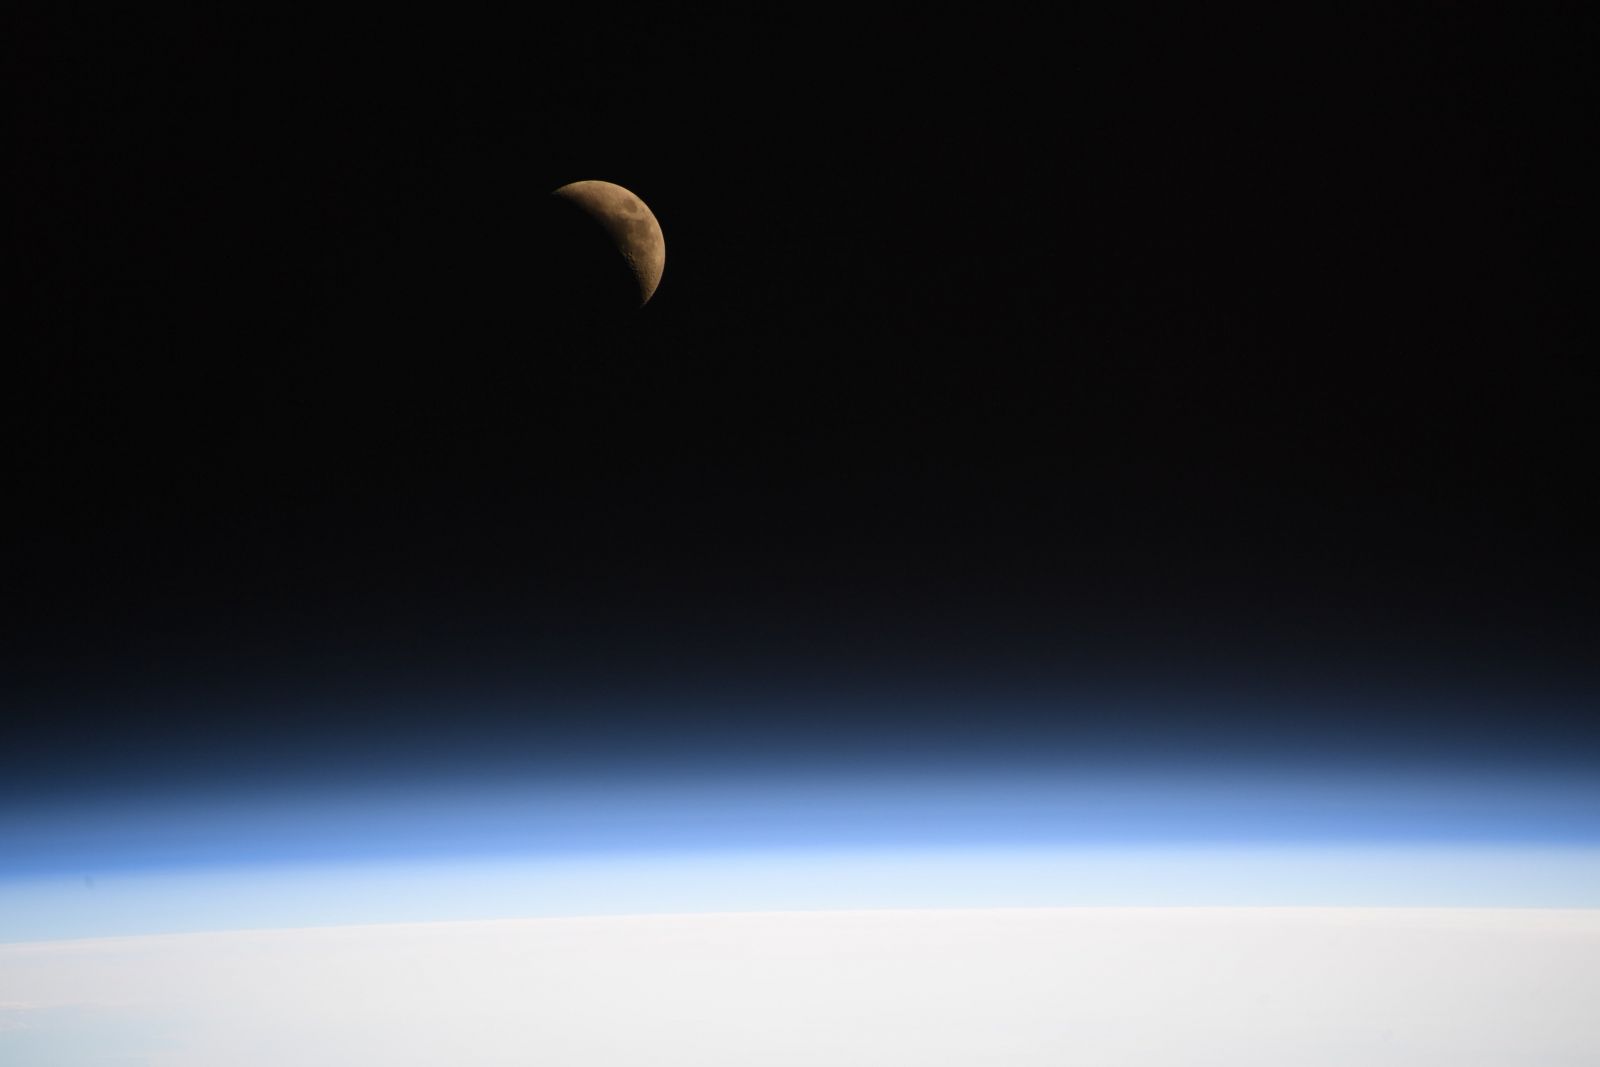  Астронавт NASA показала фото Місяця з МКС, фото: Twitter/Astro_Christina